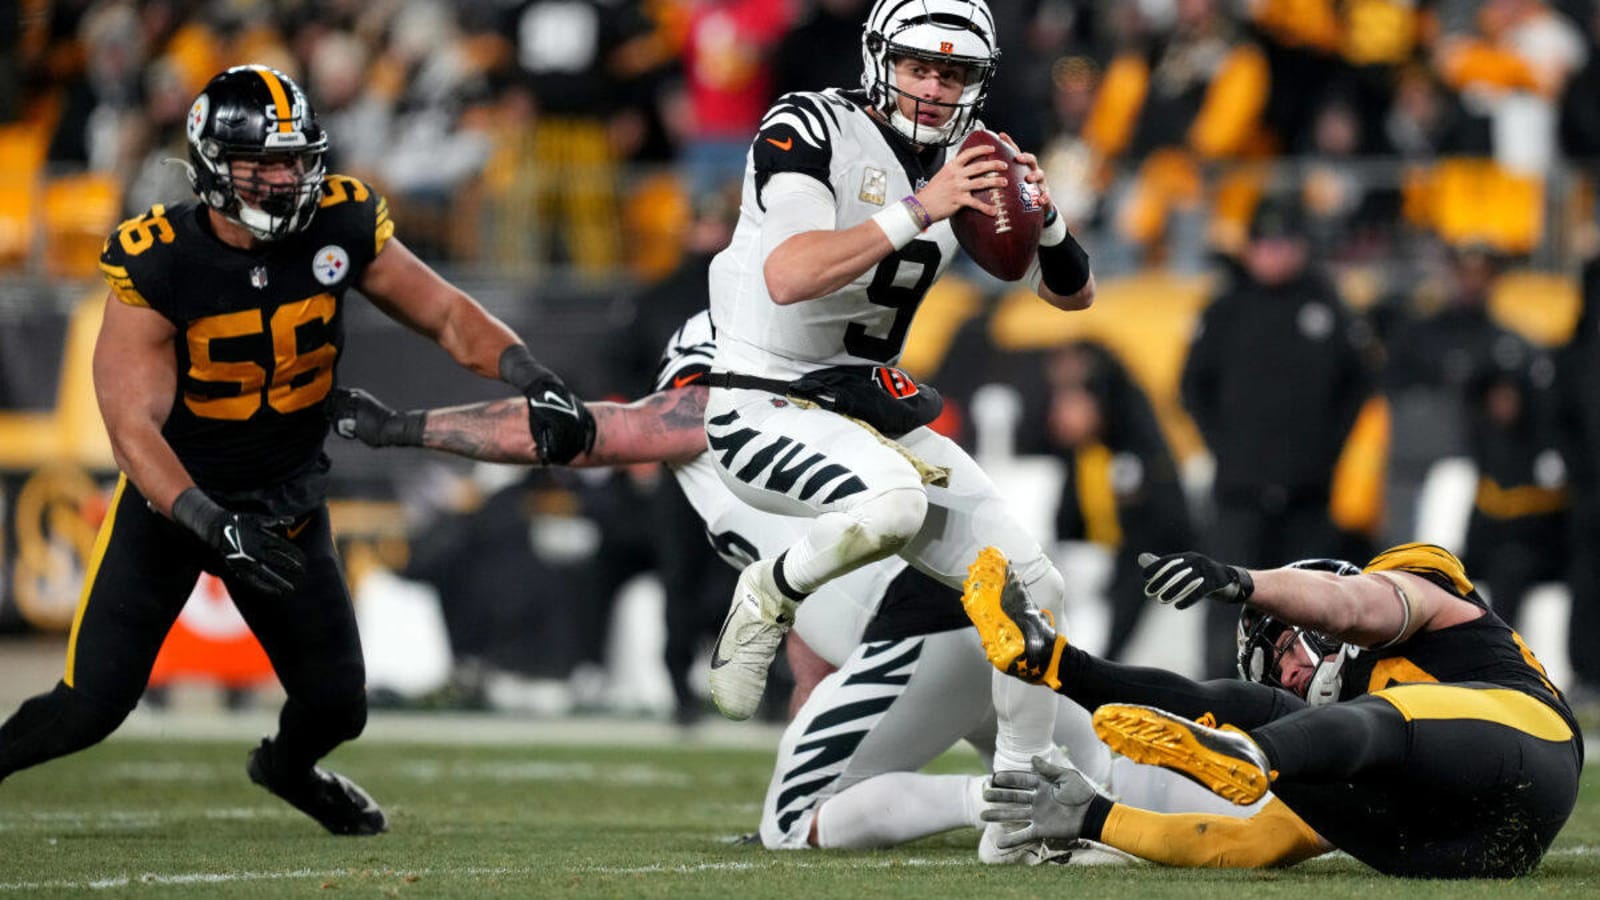 Steelers’ Mike Tomlin has his fingers crossed regarding division rival’s draft rumor